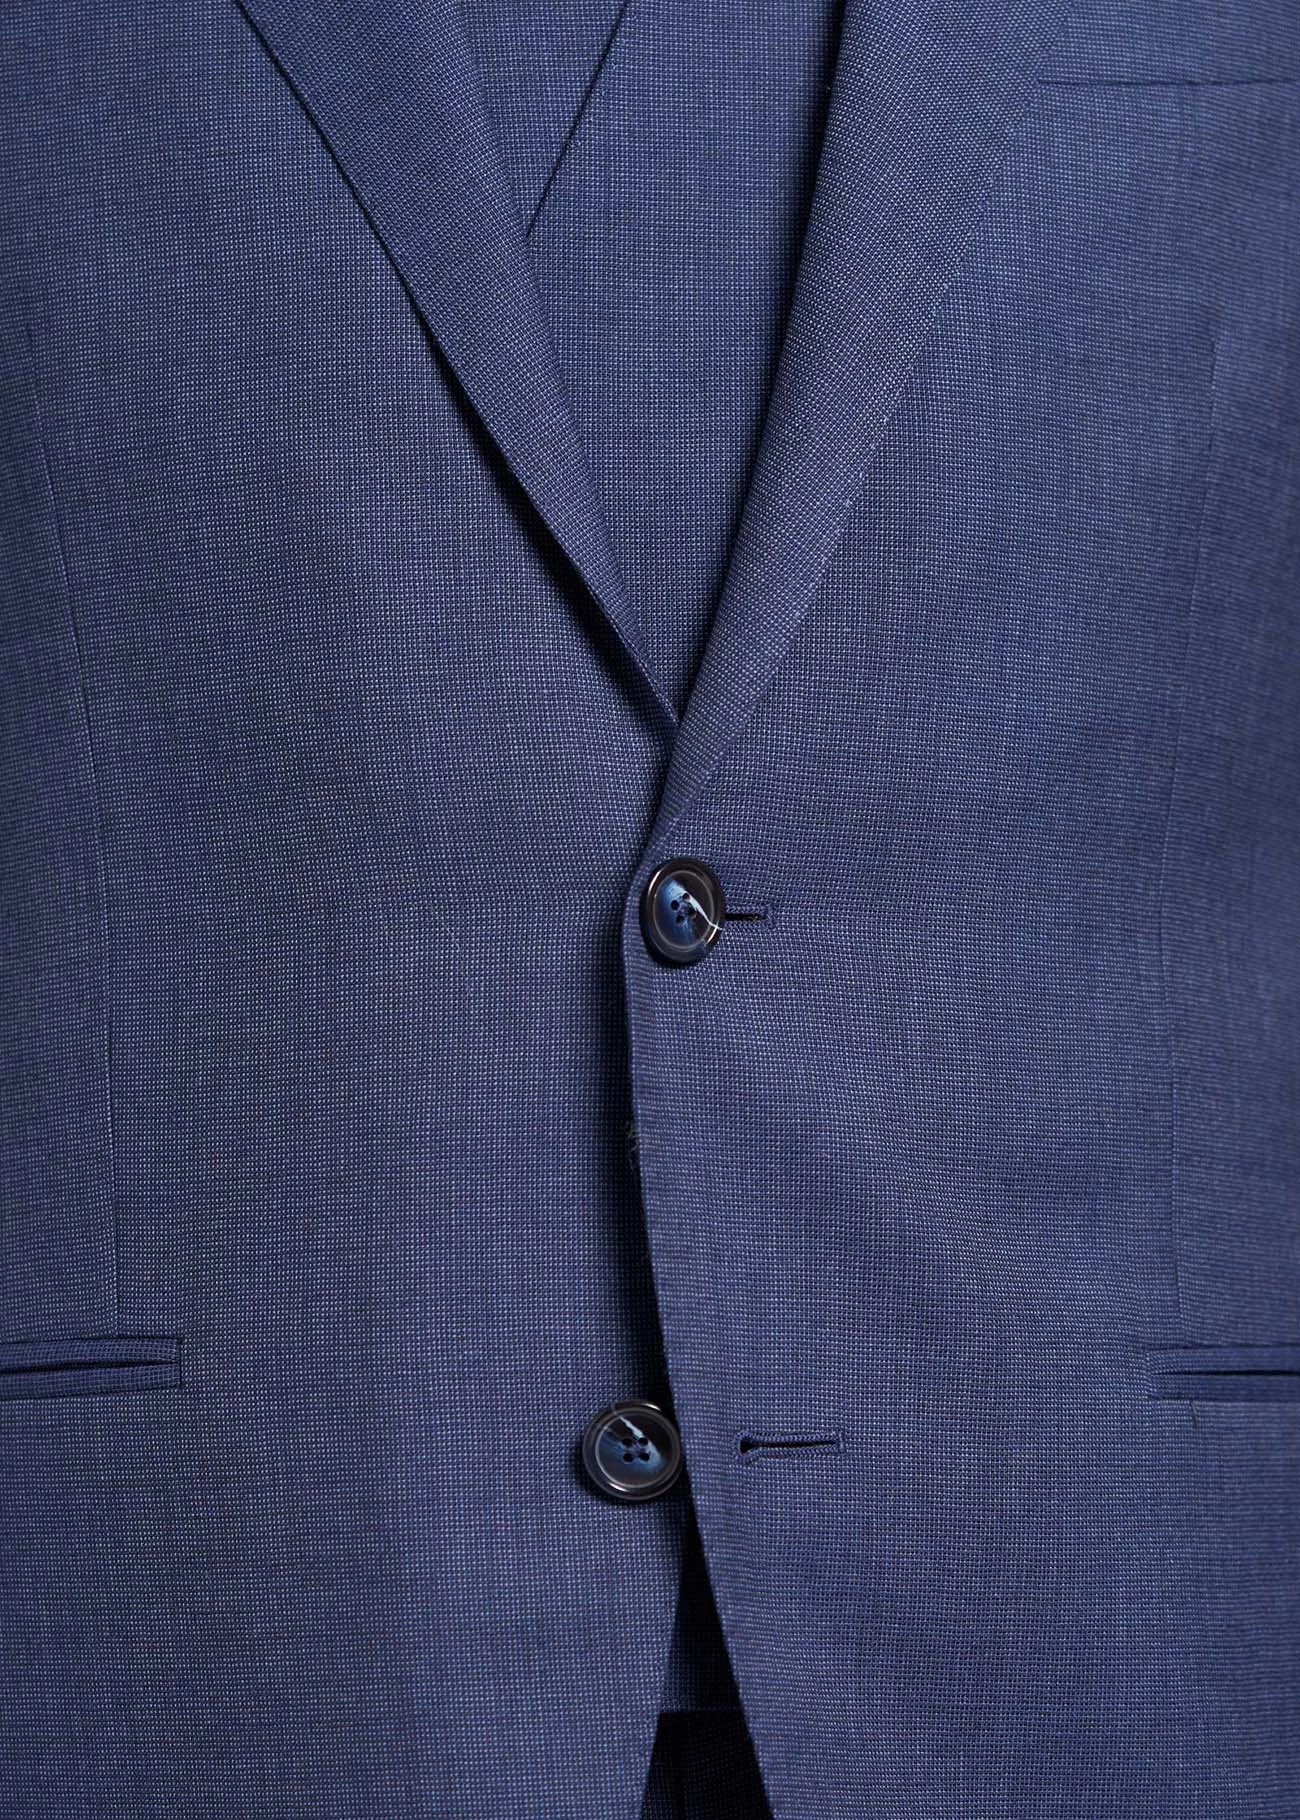 Clear-Blue-Nailhead-Tropical-Mond-Custom-Suit-Details-Close-up